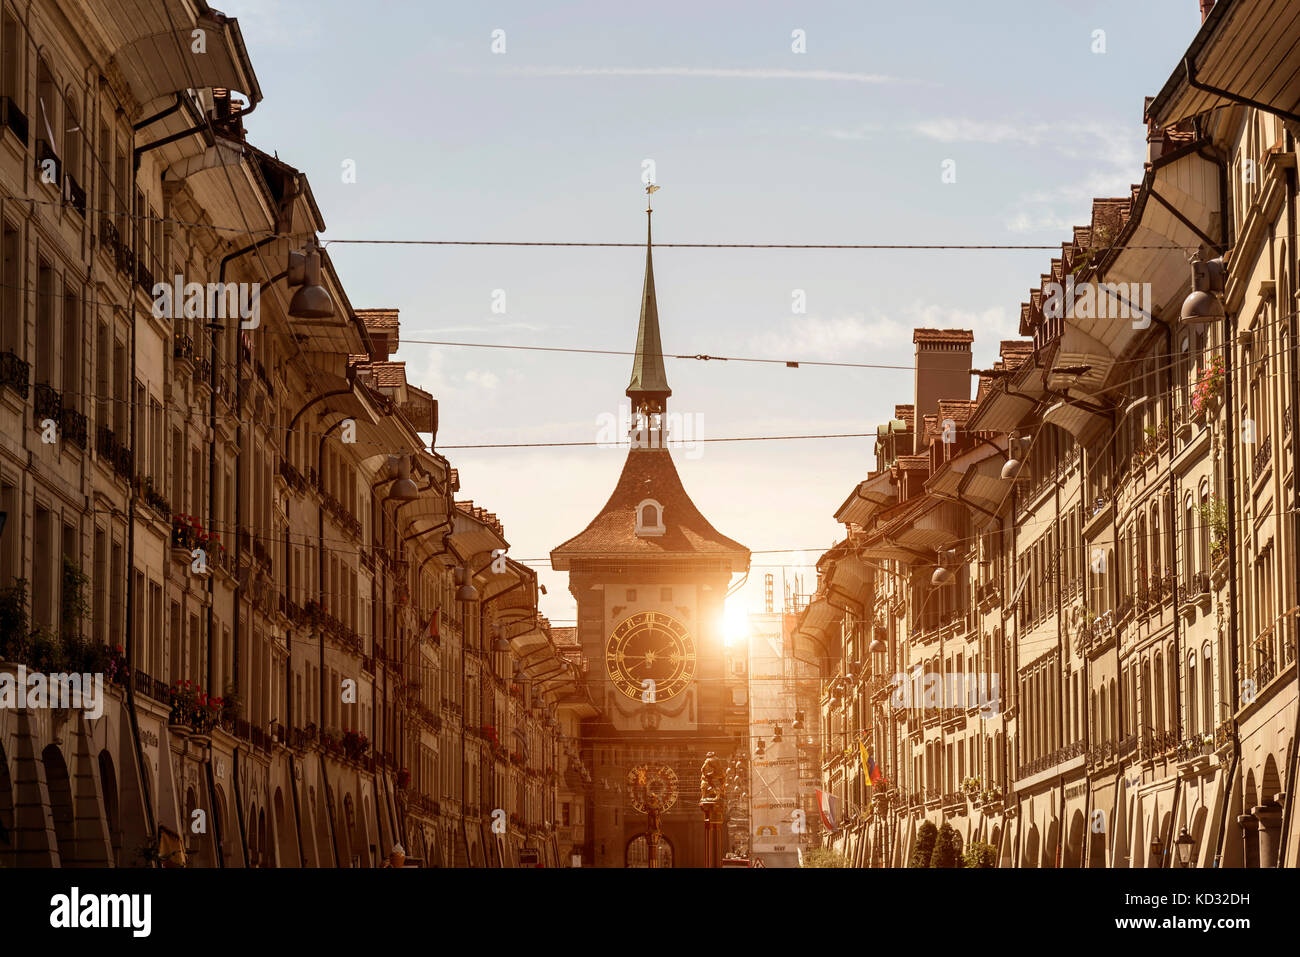 Diminishing perspective of buildings in street, Bern, Switzerland, Europe Stock Photo